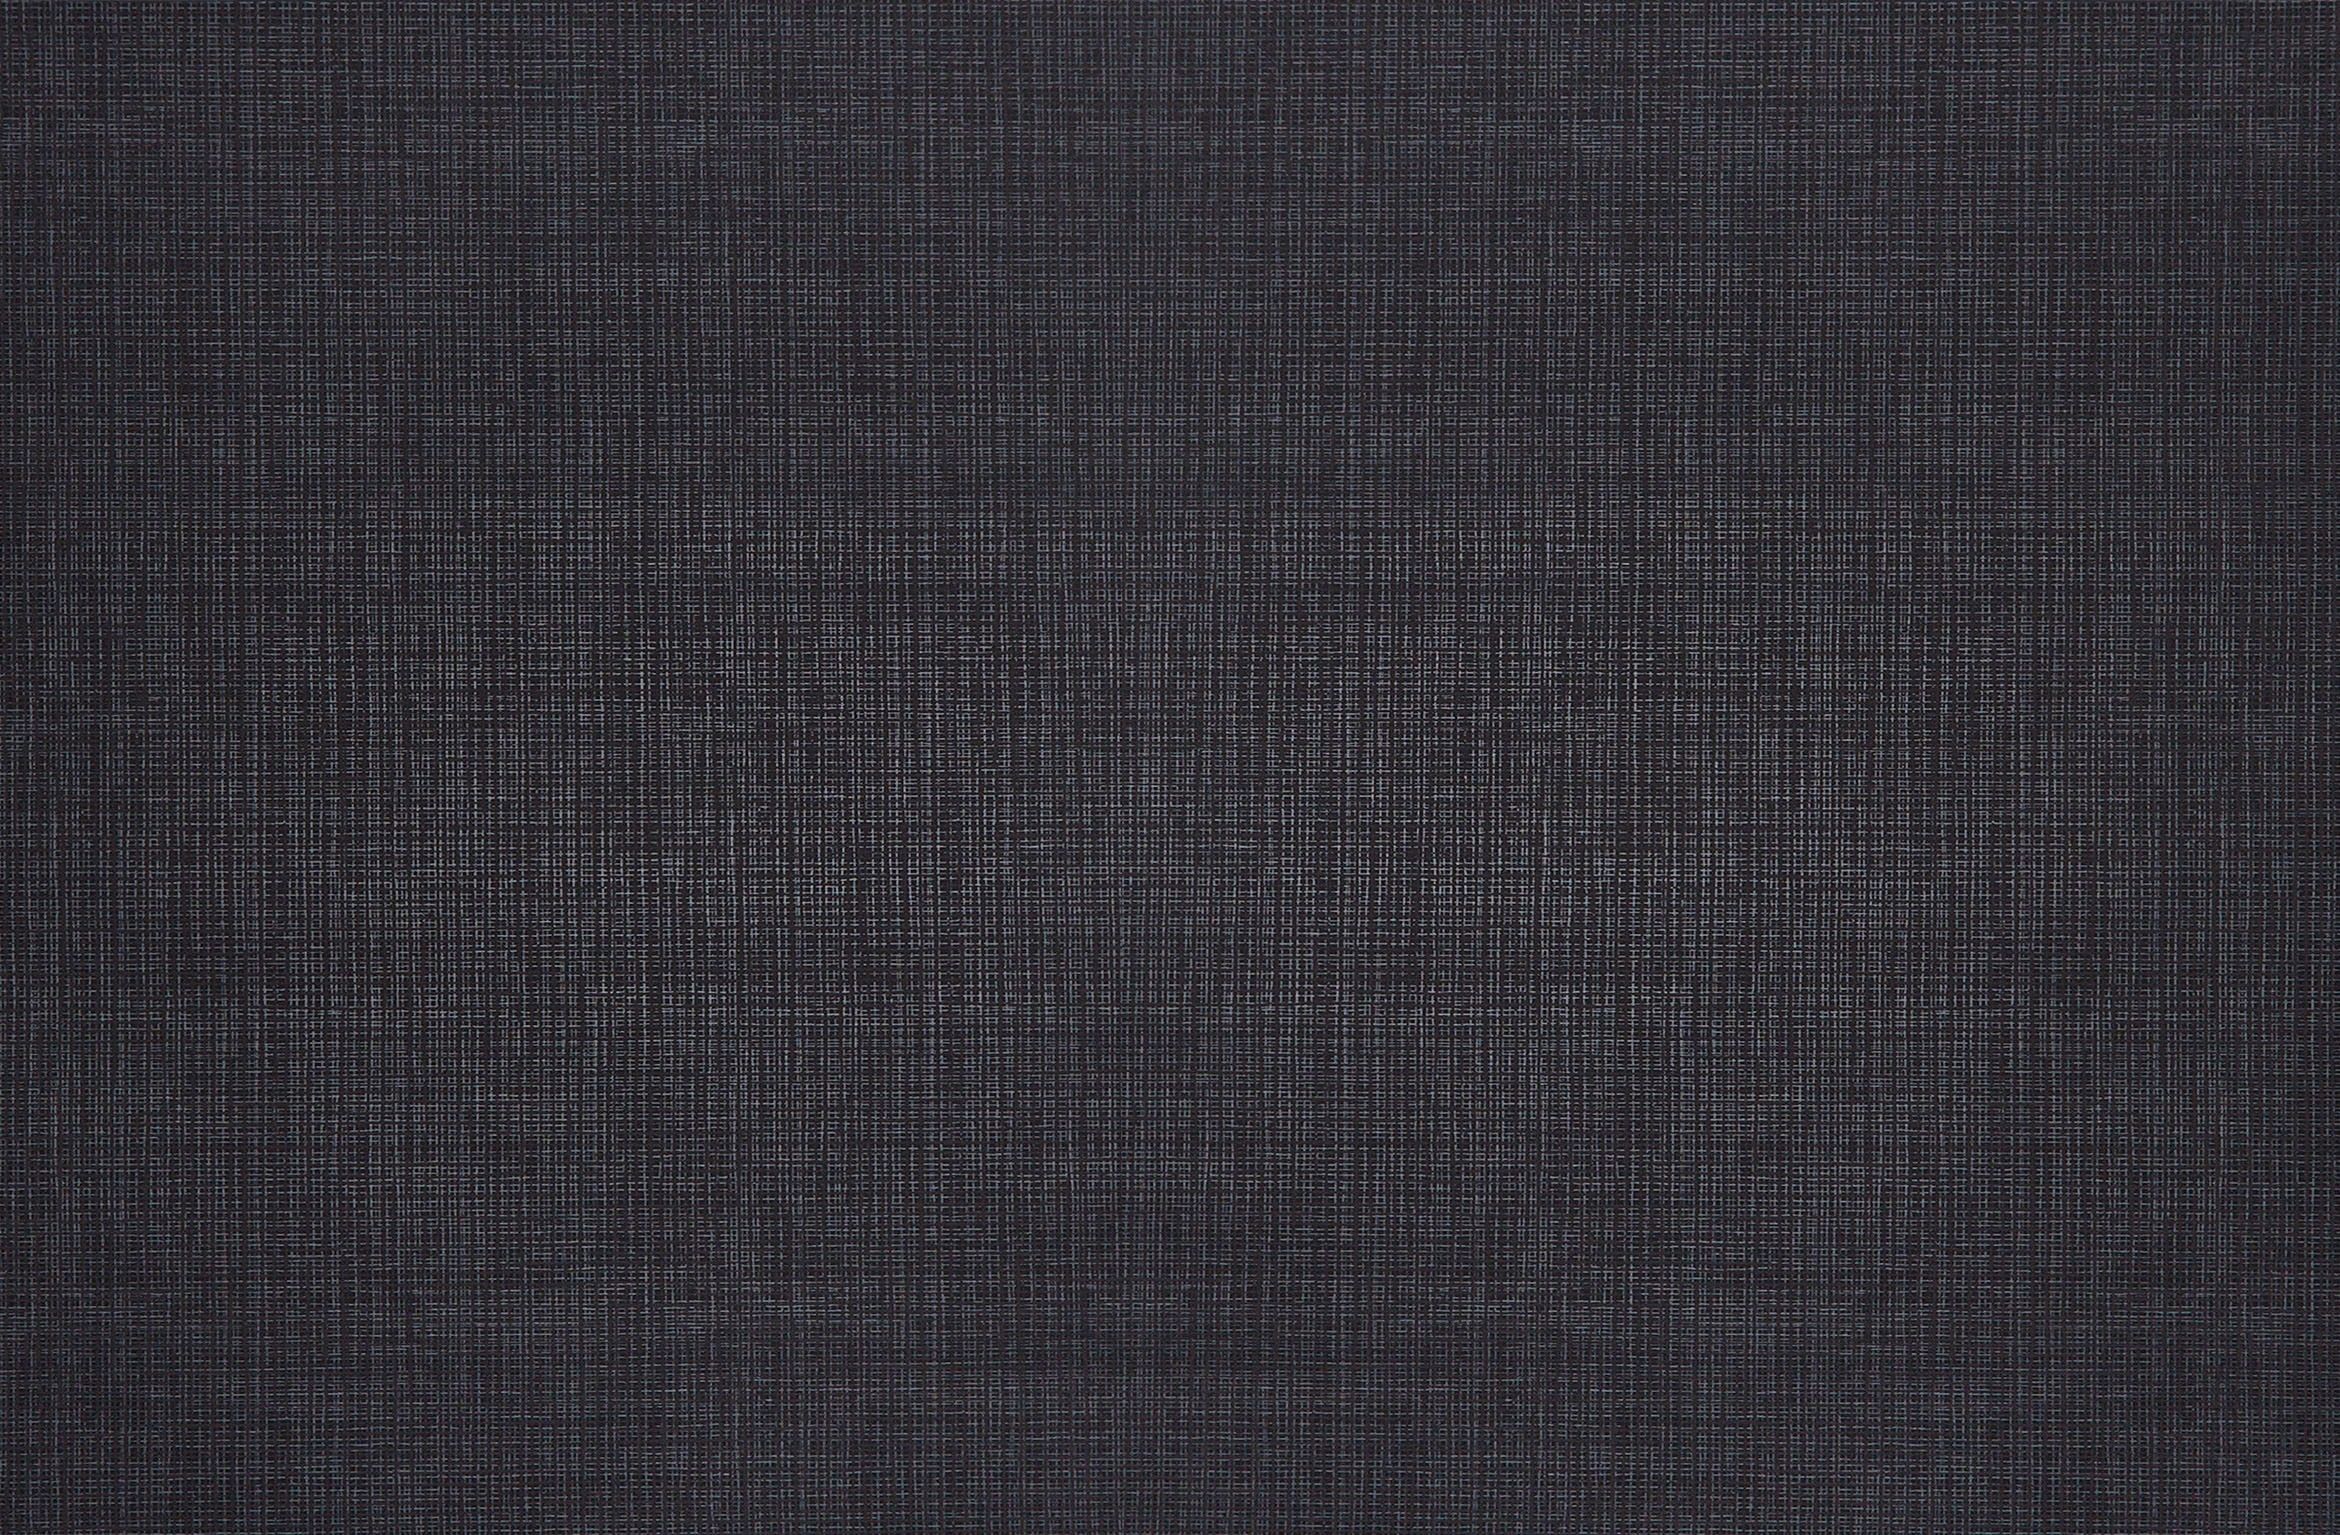 2340x1535 Solid Dark Grey Wallpaper